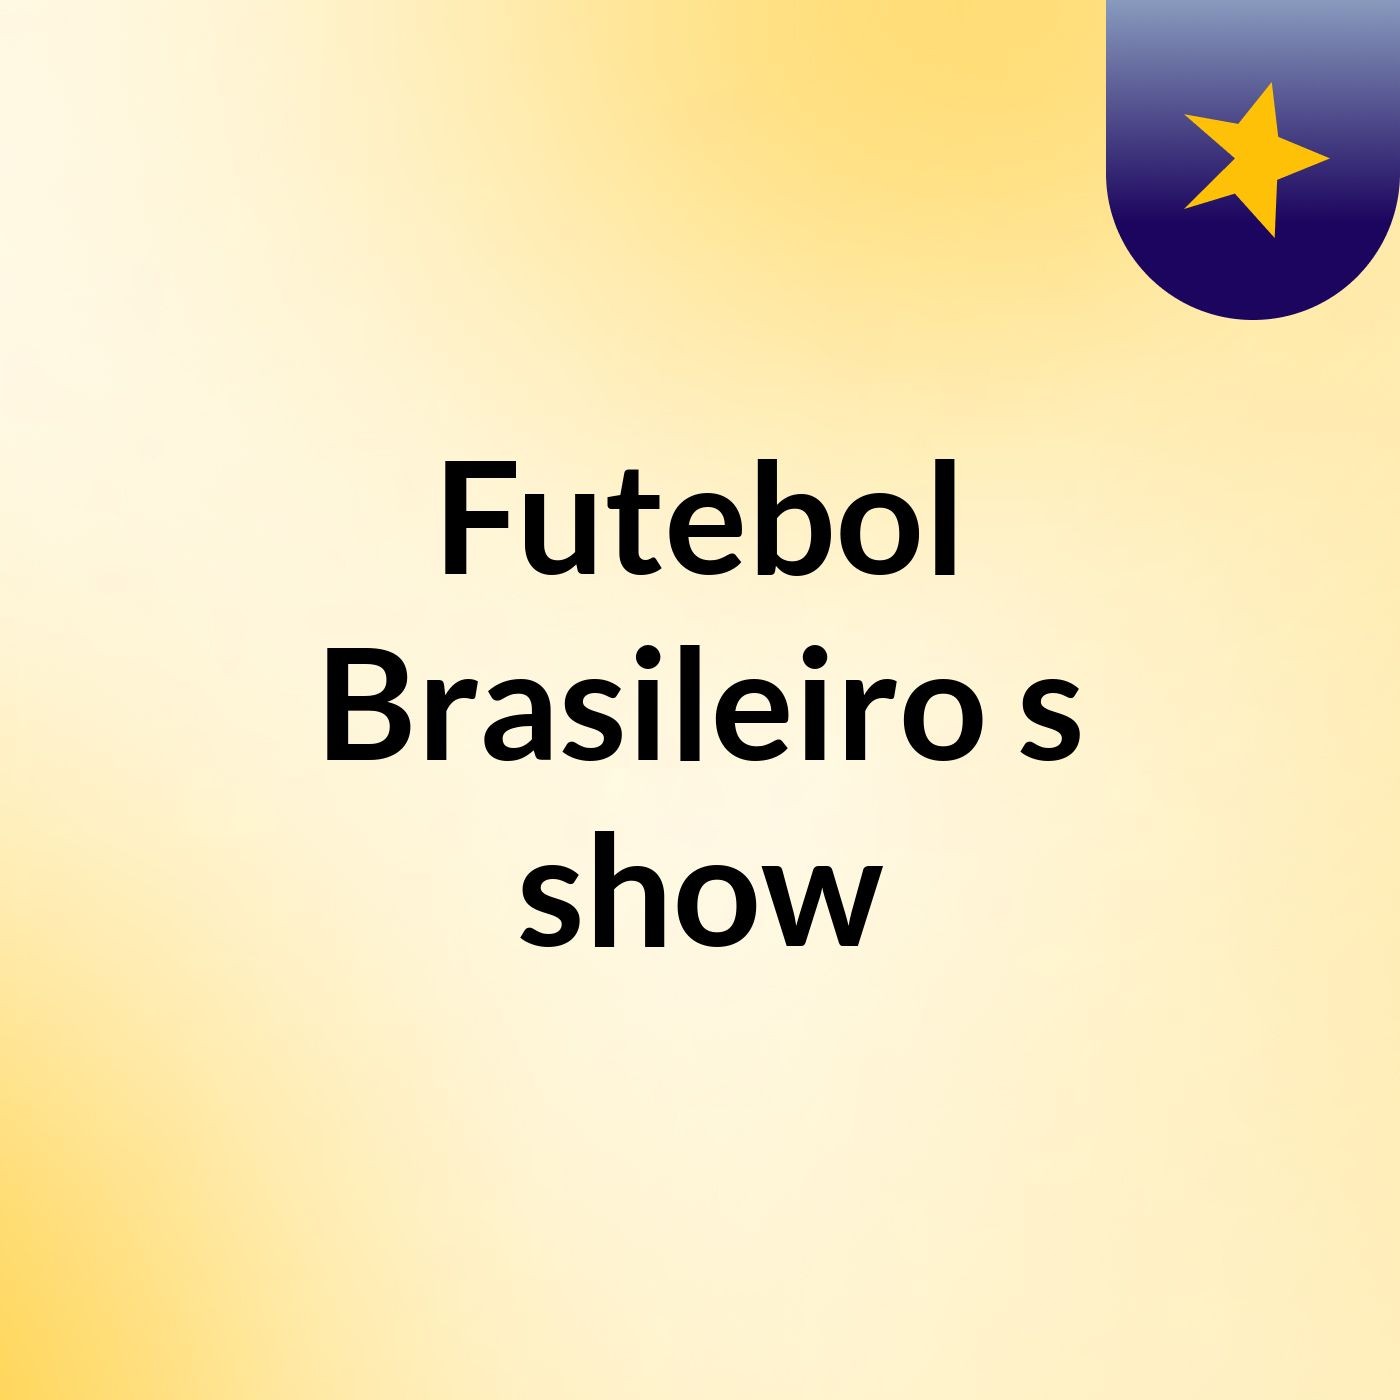 Futebol Brasileiro's show